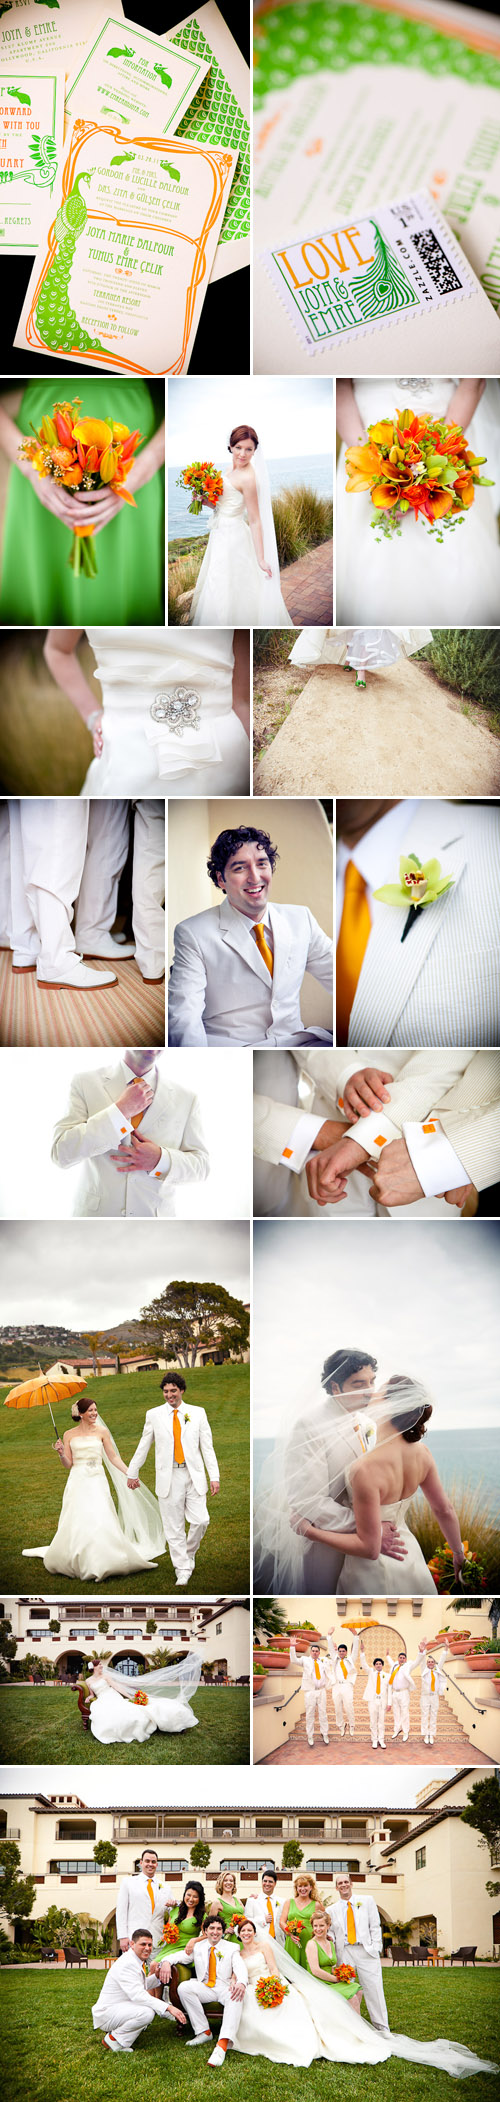 http://junebugweddings.com/img/whatjunebugloves/june2010/wedding-music-video-Callaway-Gable-Photography-Terranea-2.jpg